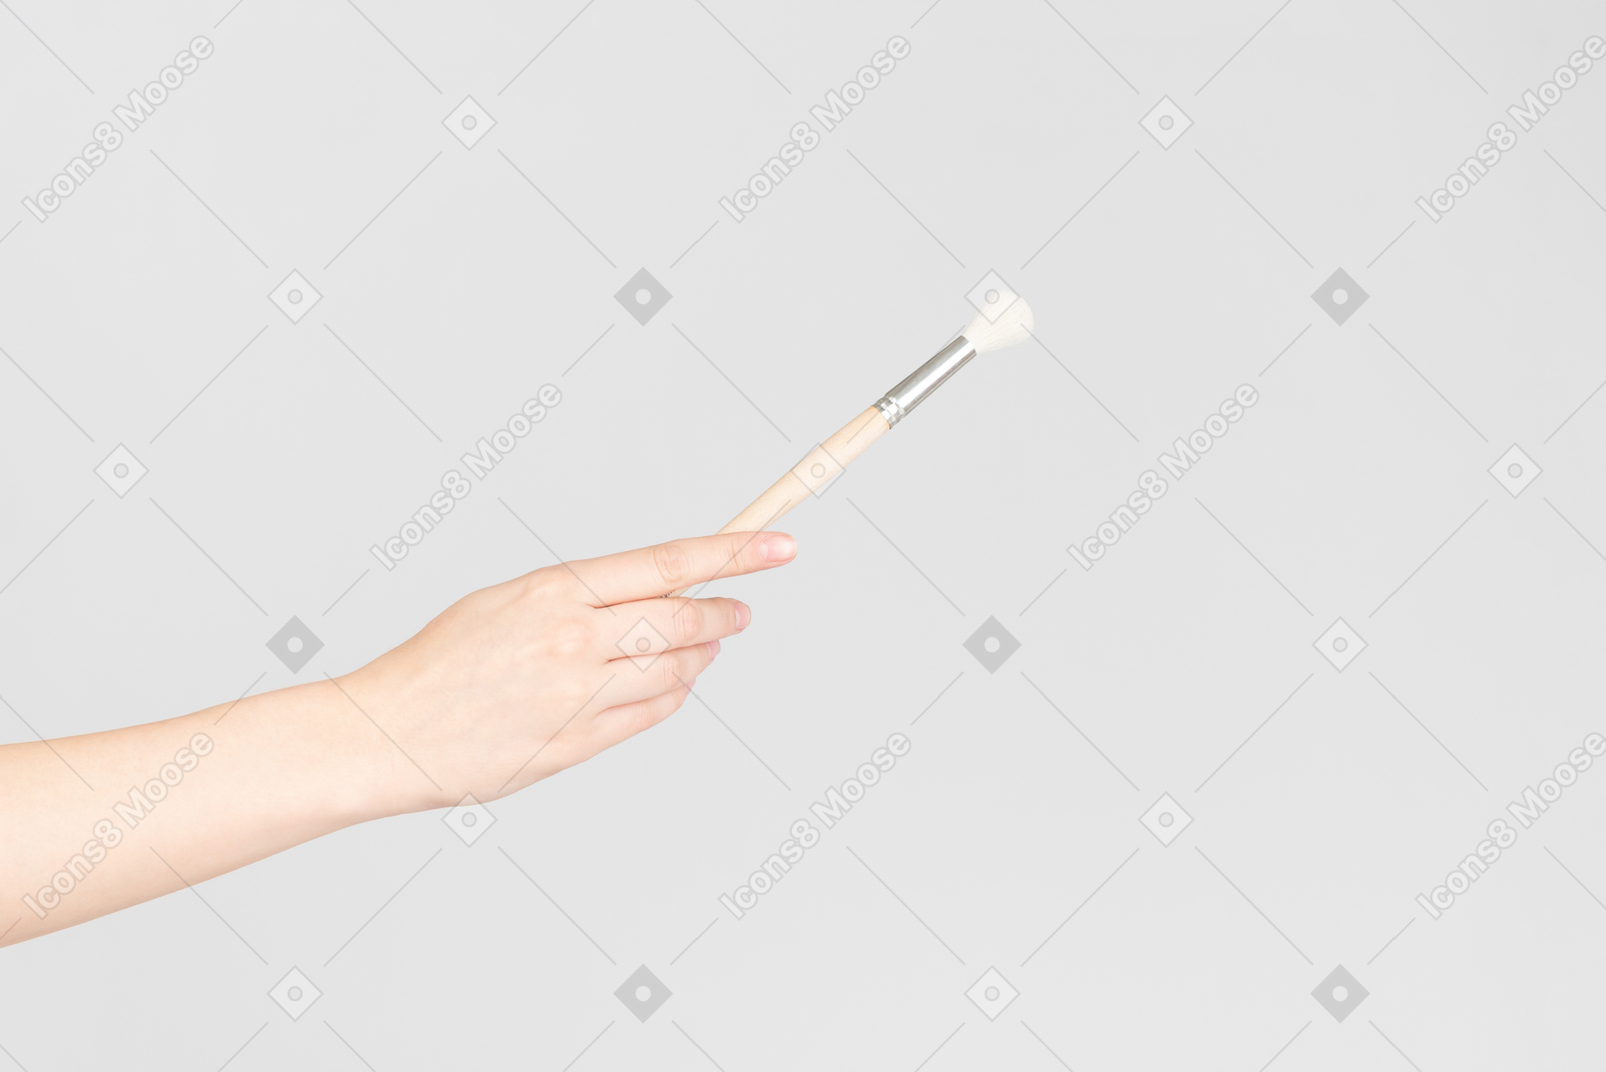 Cepillo de mano femenina